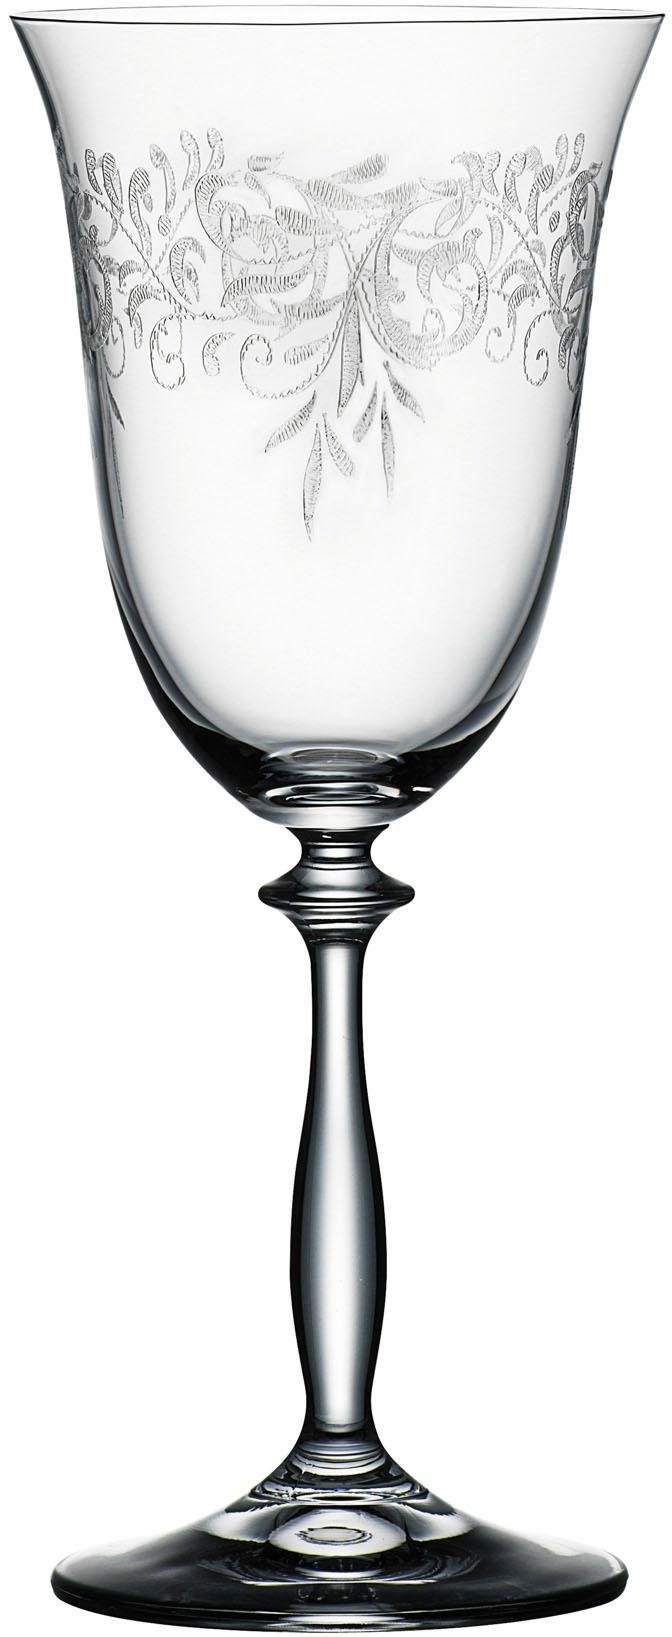 Playmobil® TRINKGLAS Weinglas Sektglas FLASCHE Glas Krug Geschirr transparent 